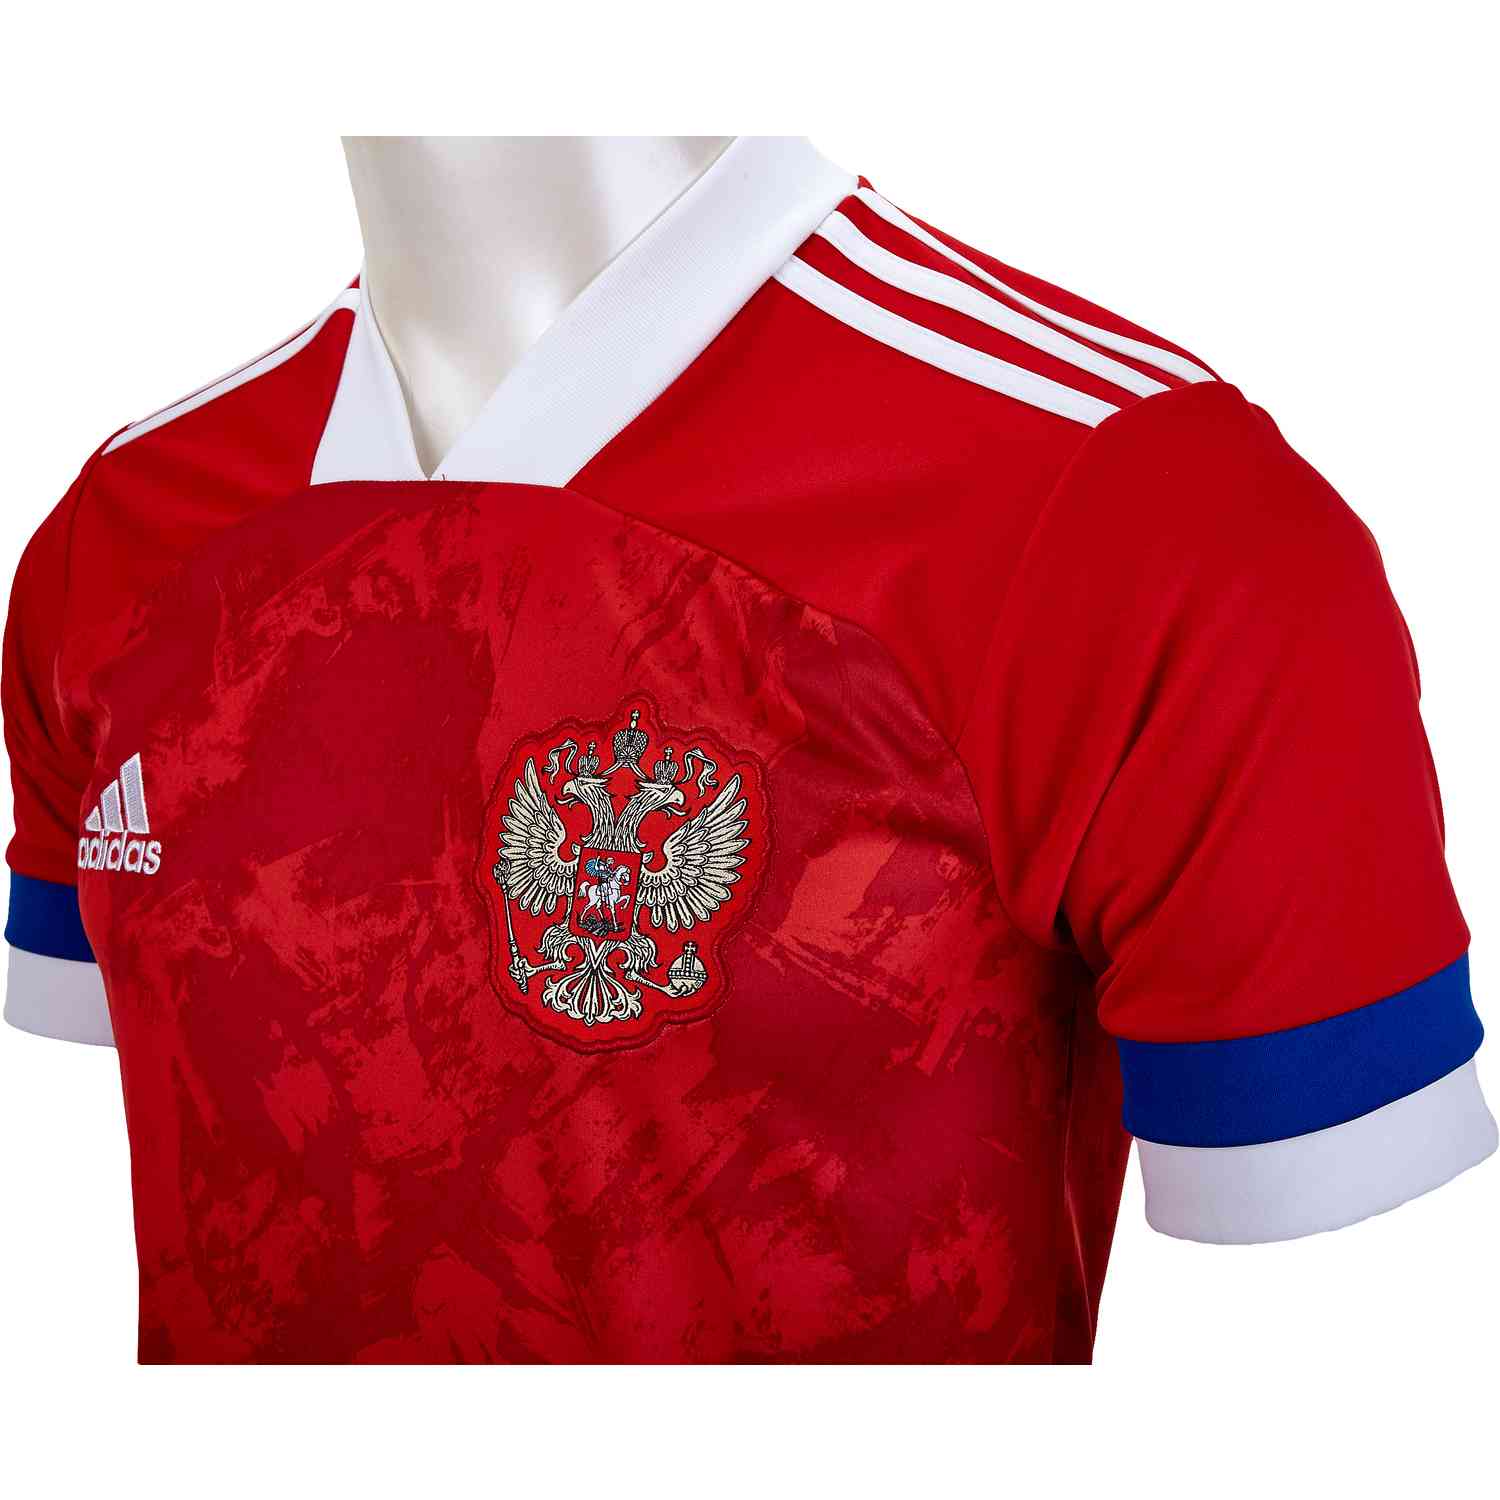 russia jersey